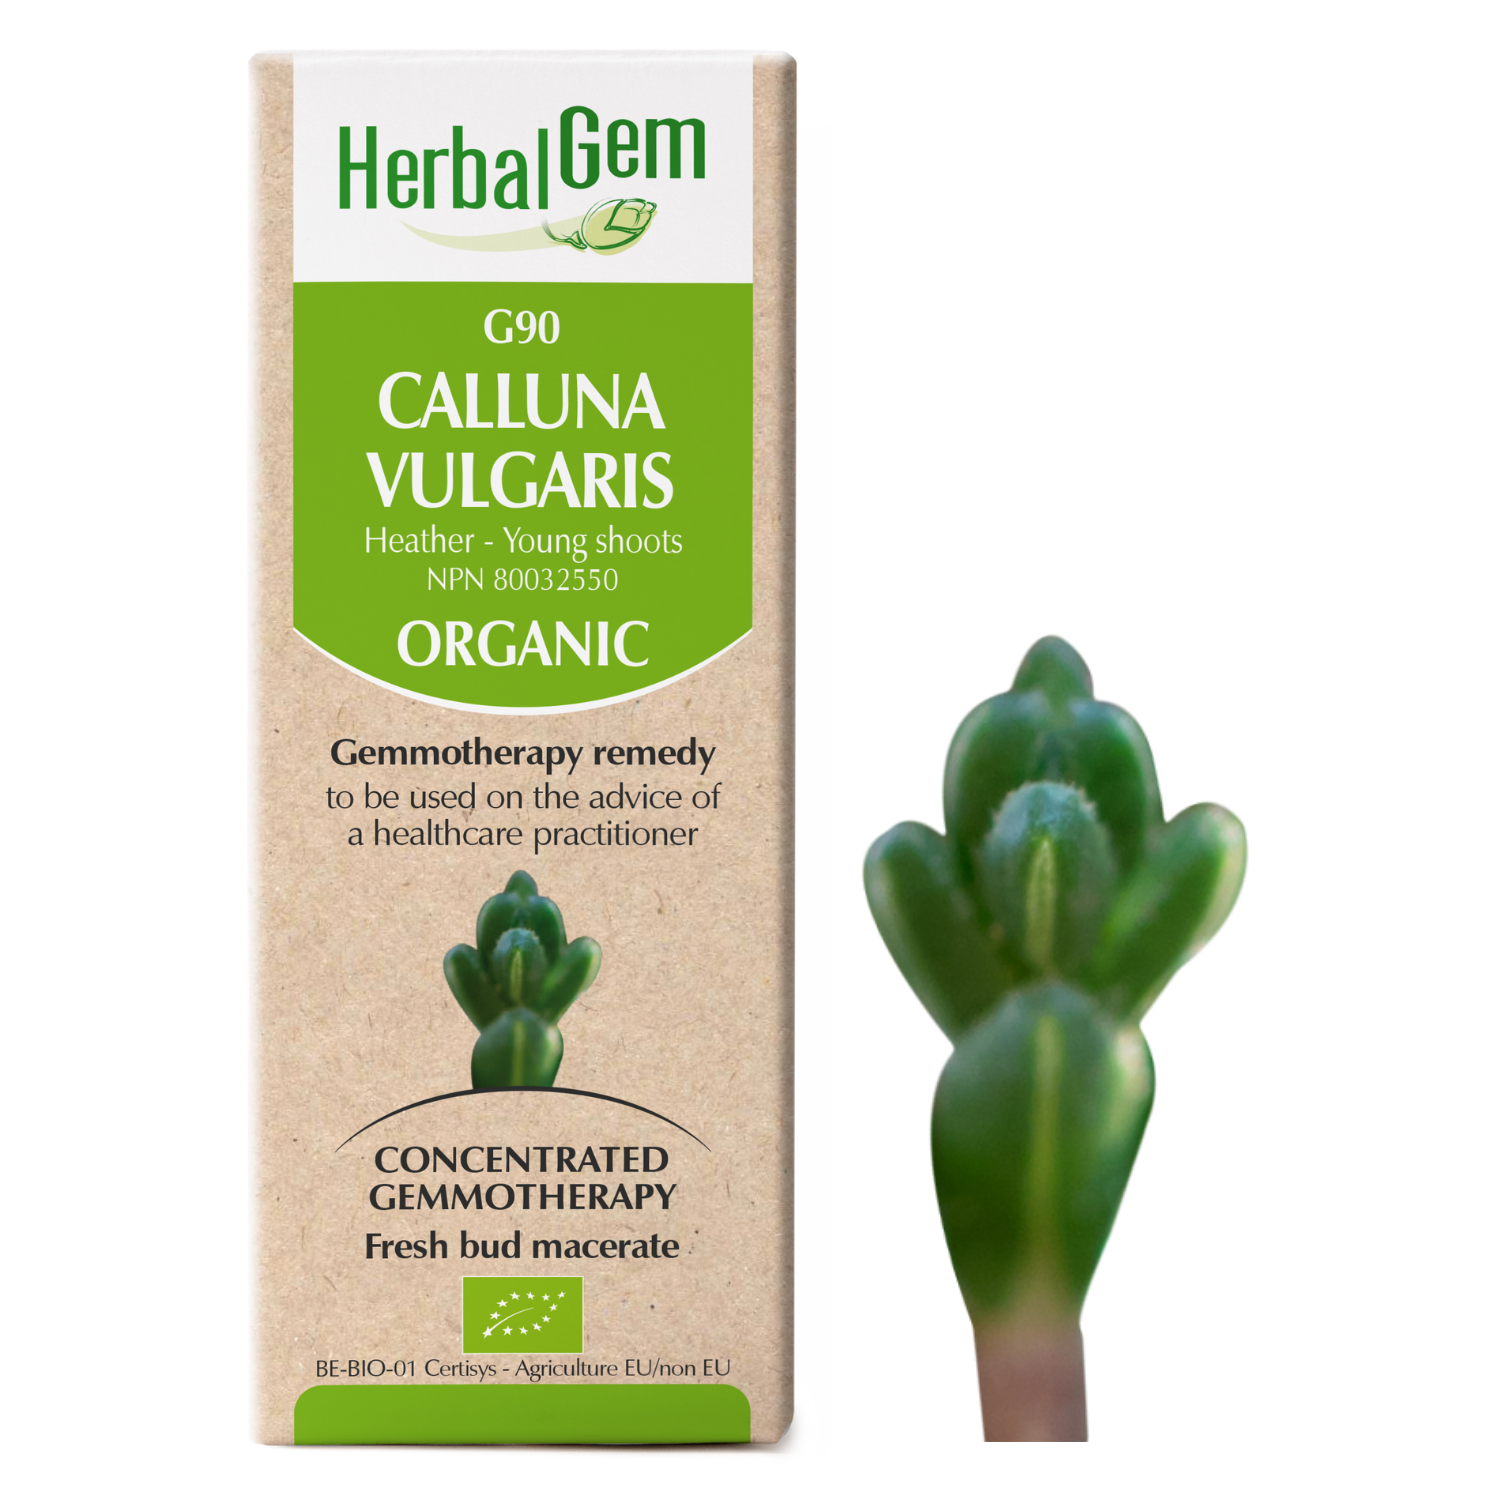 G90 Calluna vulgaris Gemmotherapy remedy – Organic  Heather – Young shoots